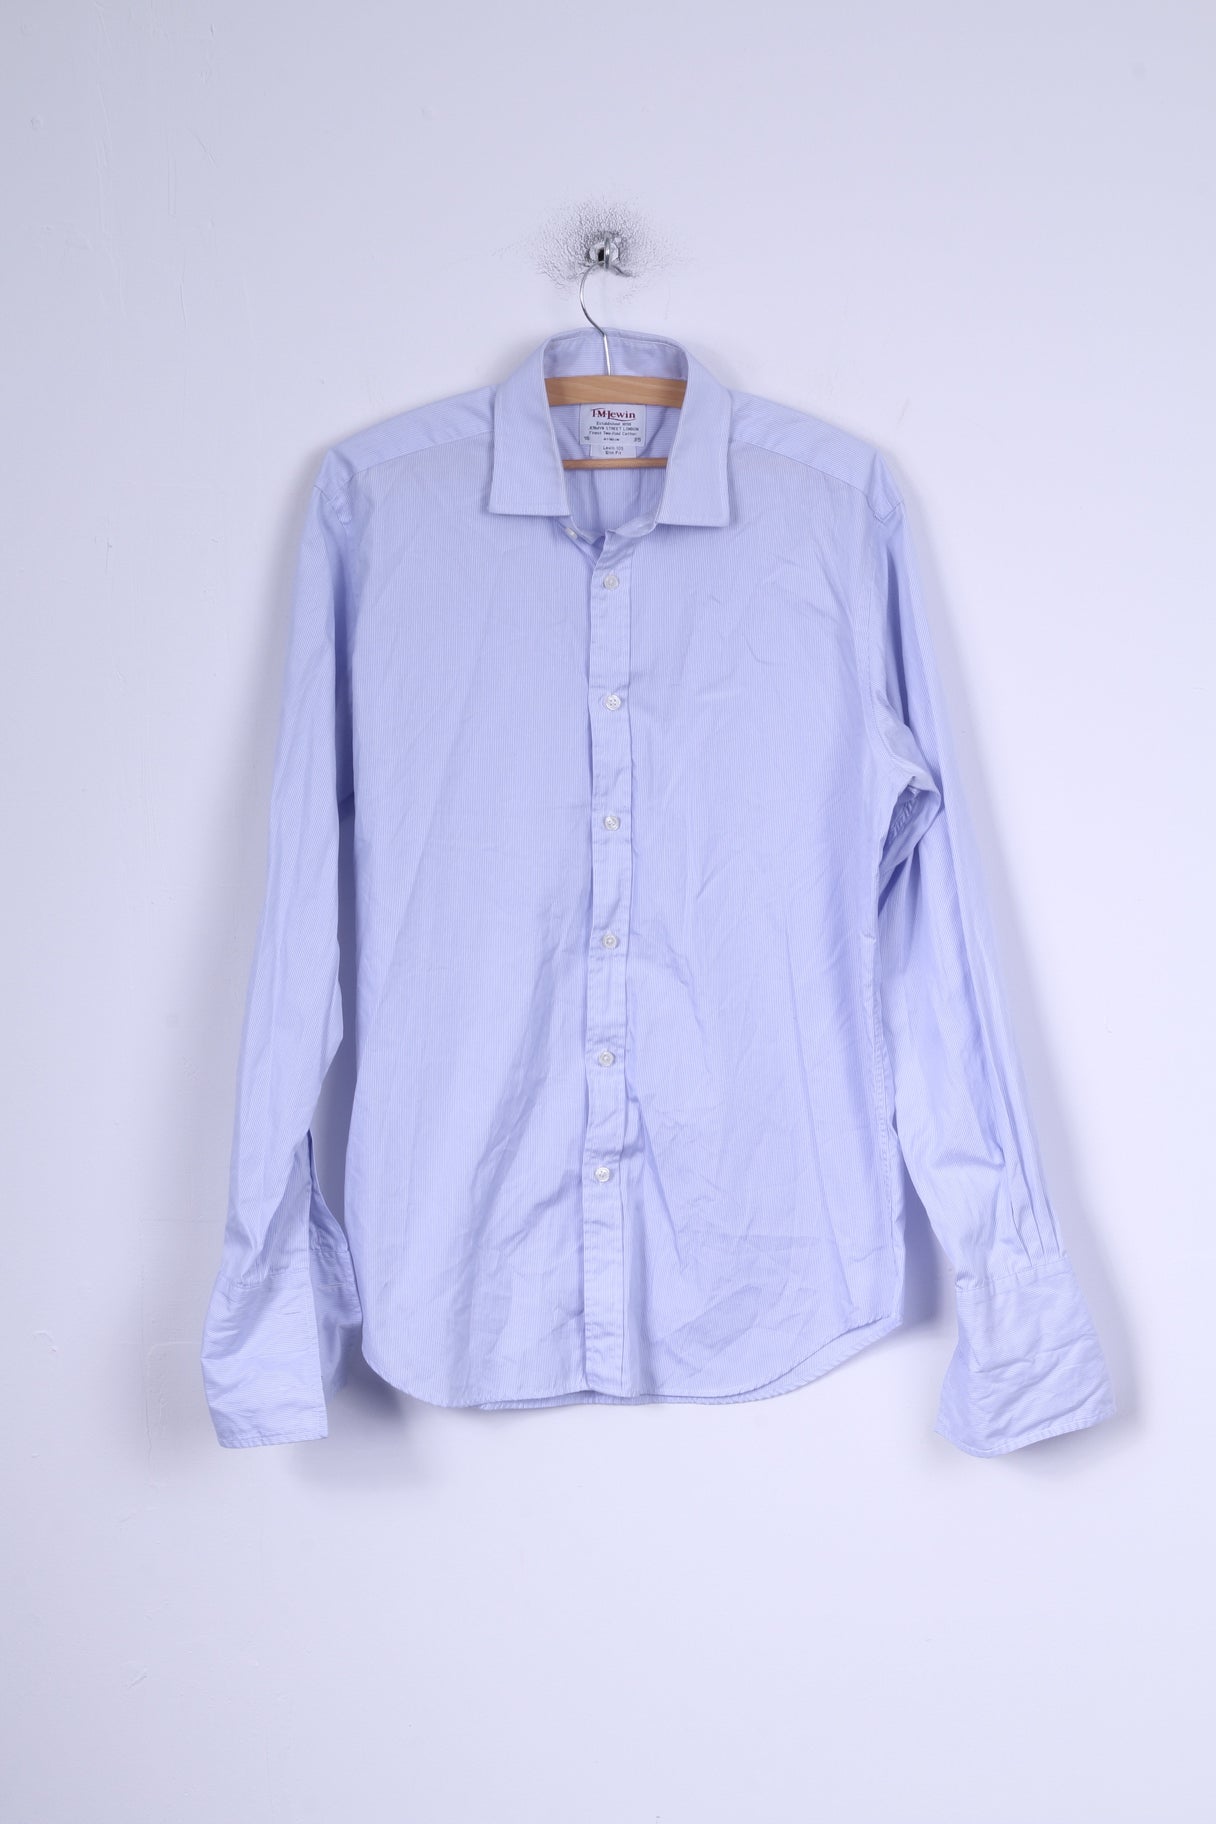 T.M Lewin Mens 16 35 L Casual Shirt Blue Striped Cotton Slim Fit Lewin 100